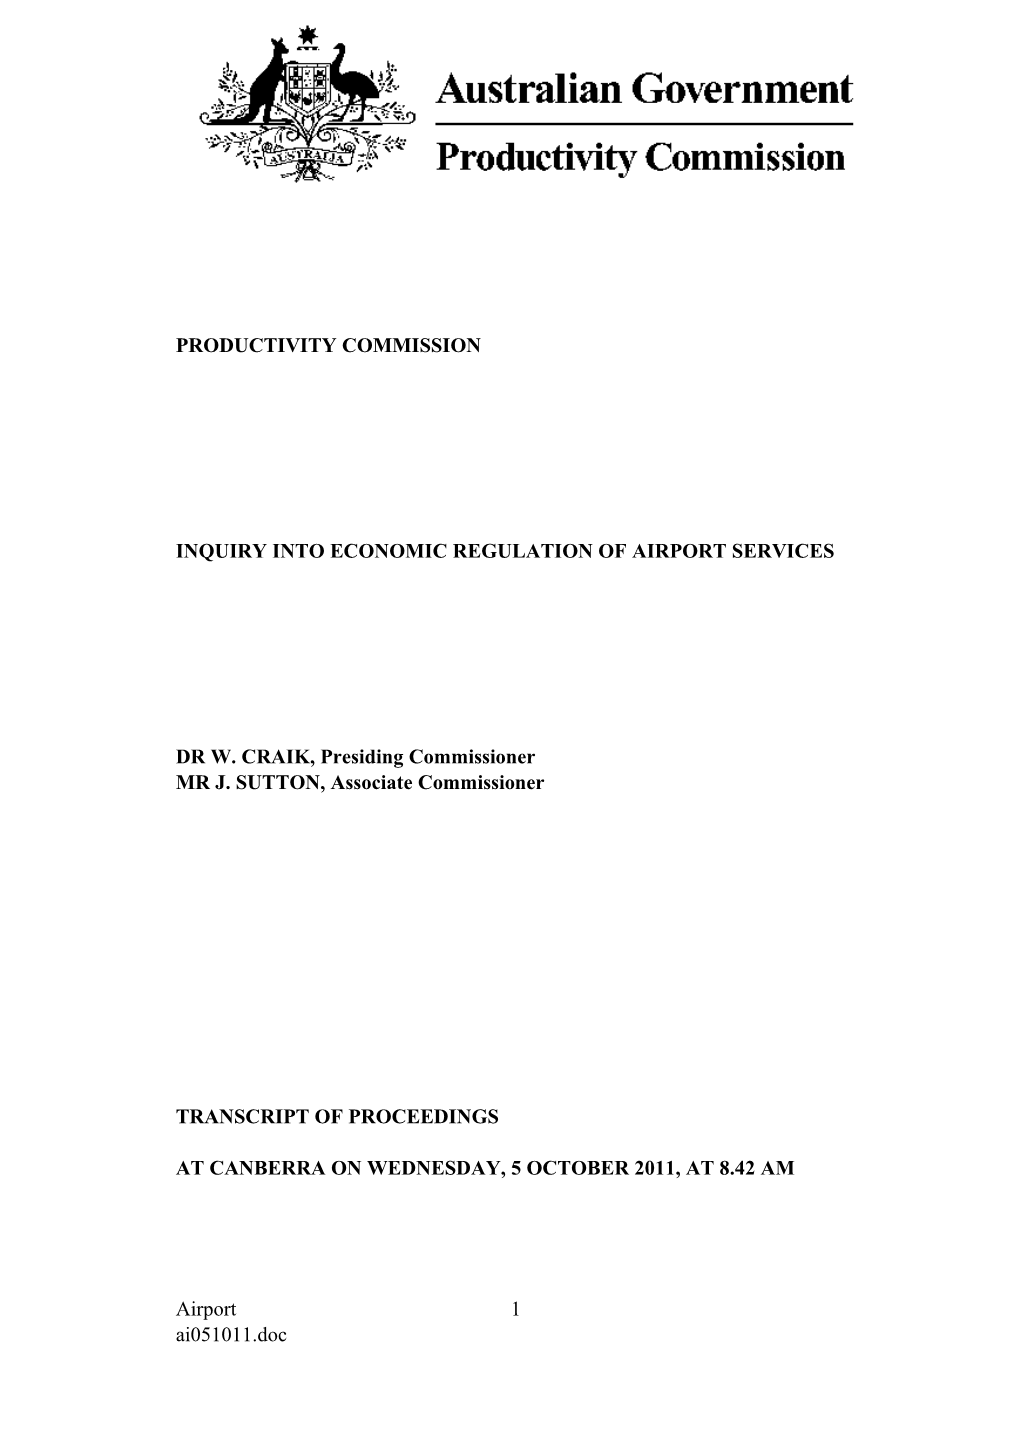 Inquiry Into Economic Regulation of Airport Services